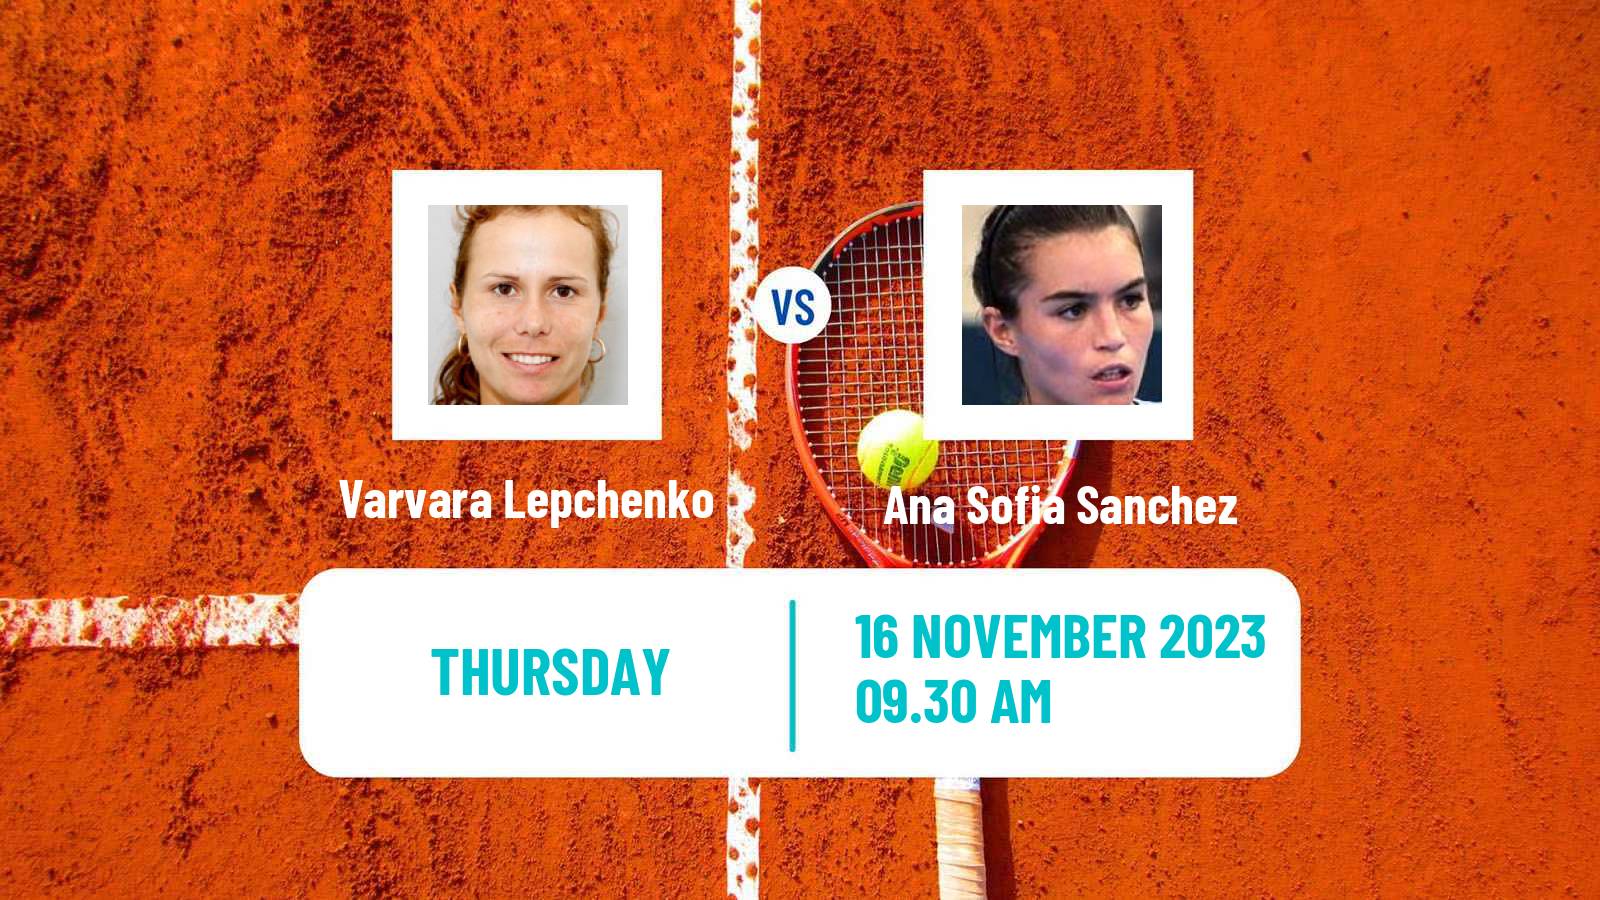 Tennis ITF W25 Santo Domingo 6 Women Varvara Lepchenko - Ana Sofia Sanchez